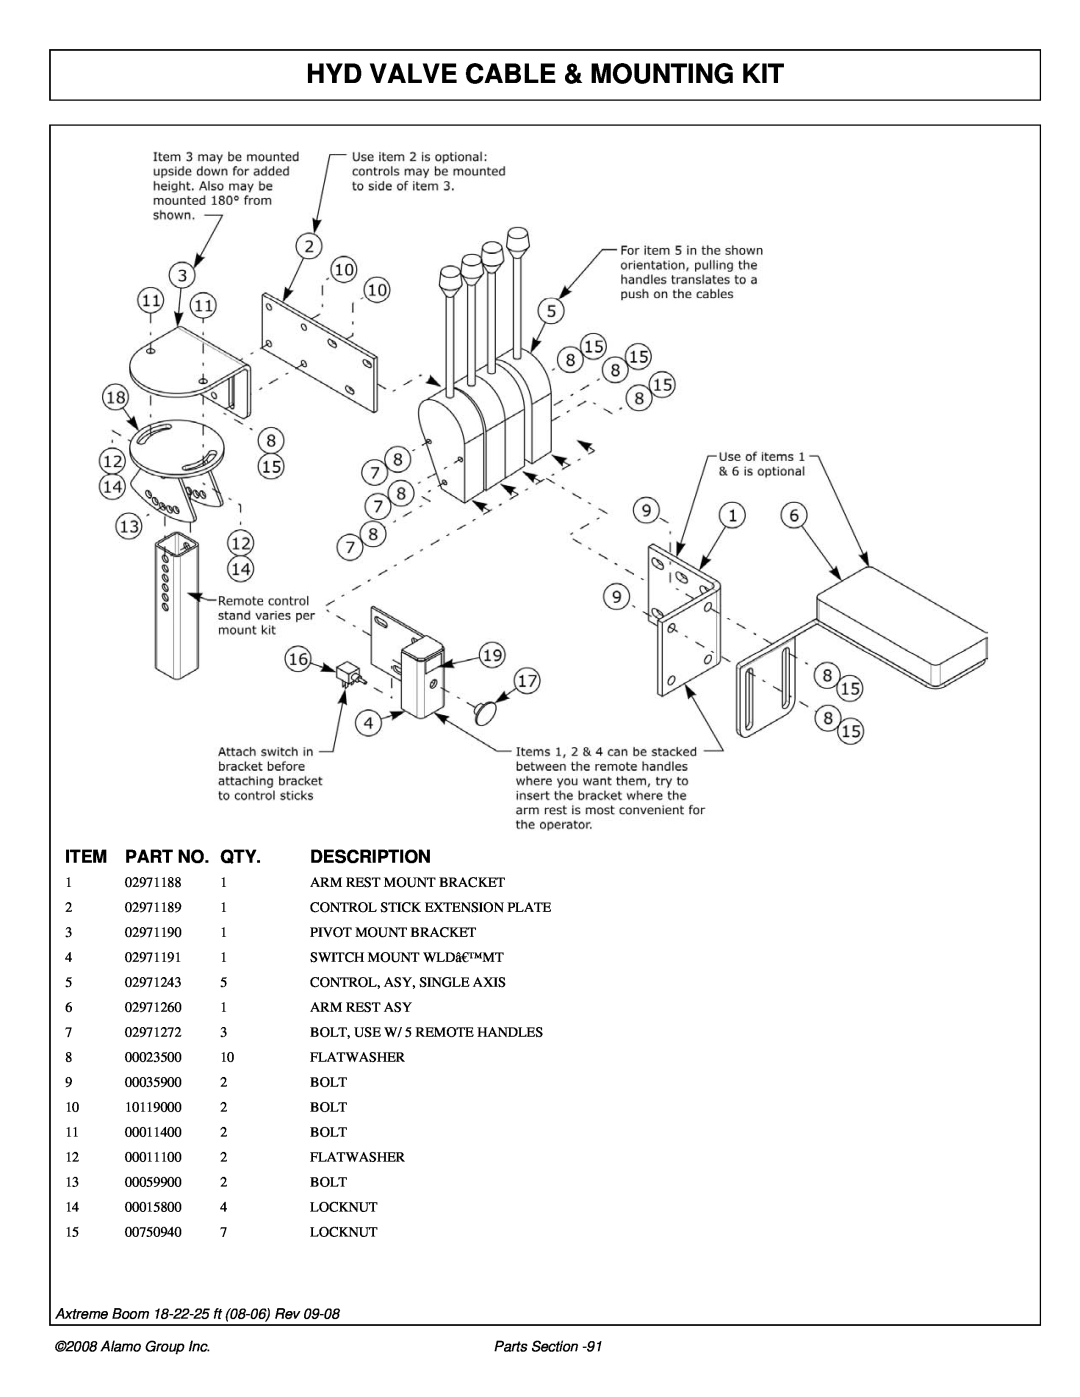 Alamo FC-P-0002 manual Hyd Valve Cable & Mounting Kit, Description, Axtreme Boom 18-22-25 ft 08-06 Rev, Alamo Group Inc 